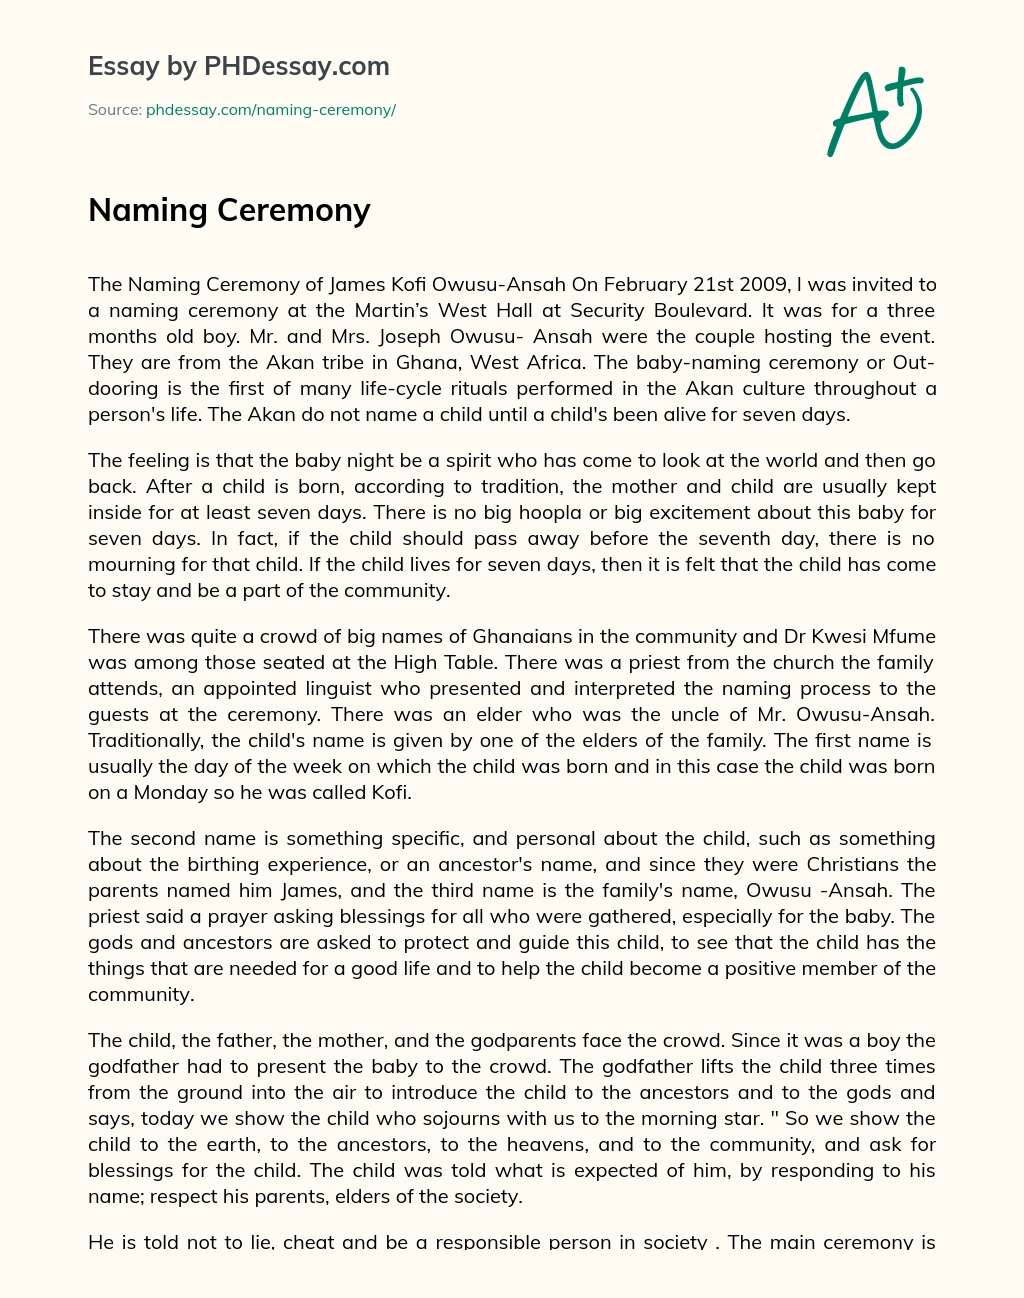 descriptive essay on naming ceremony